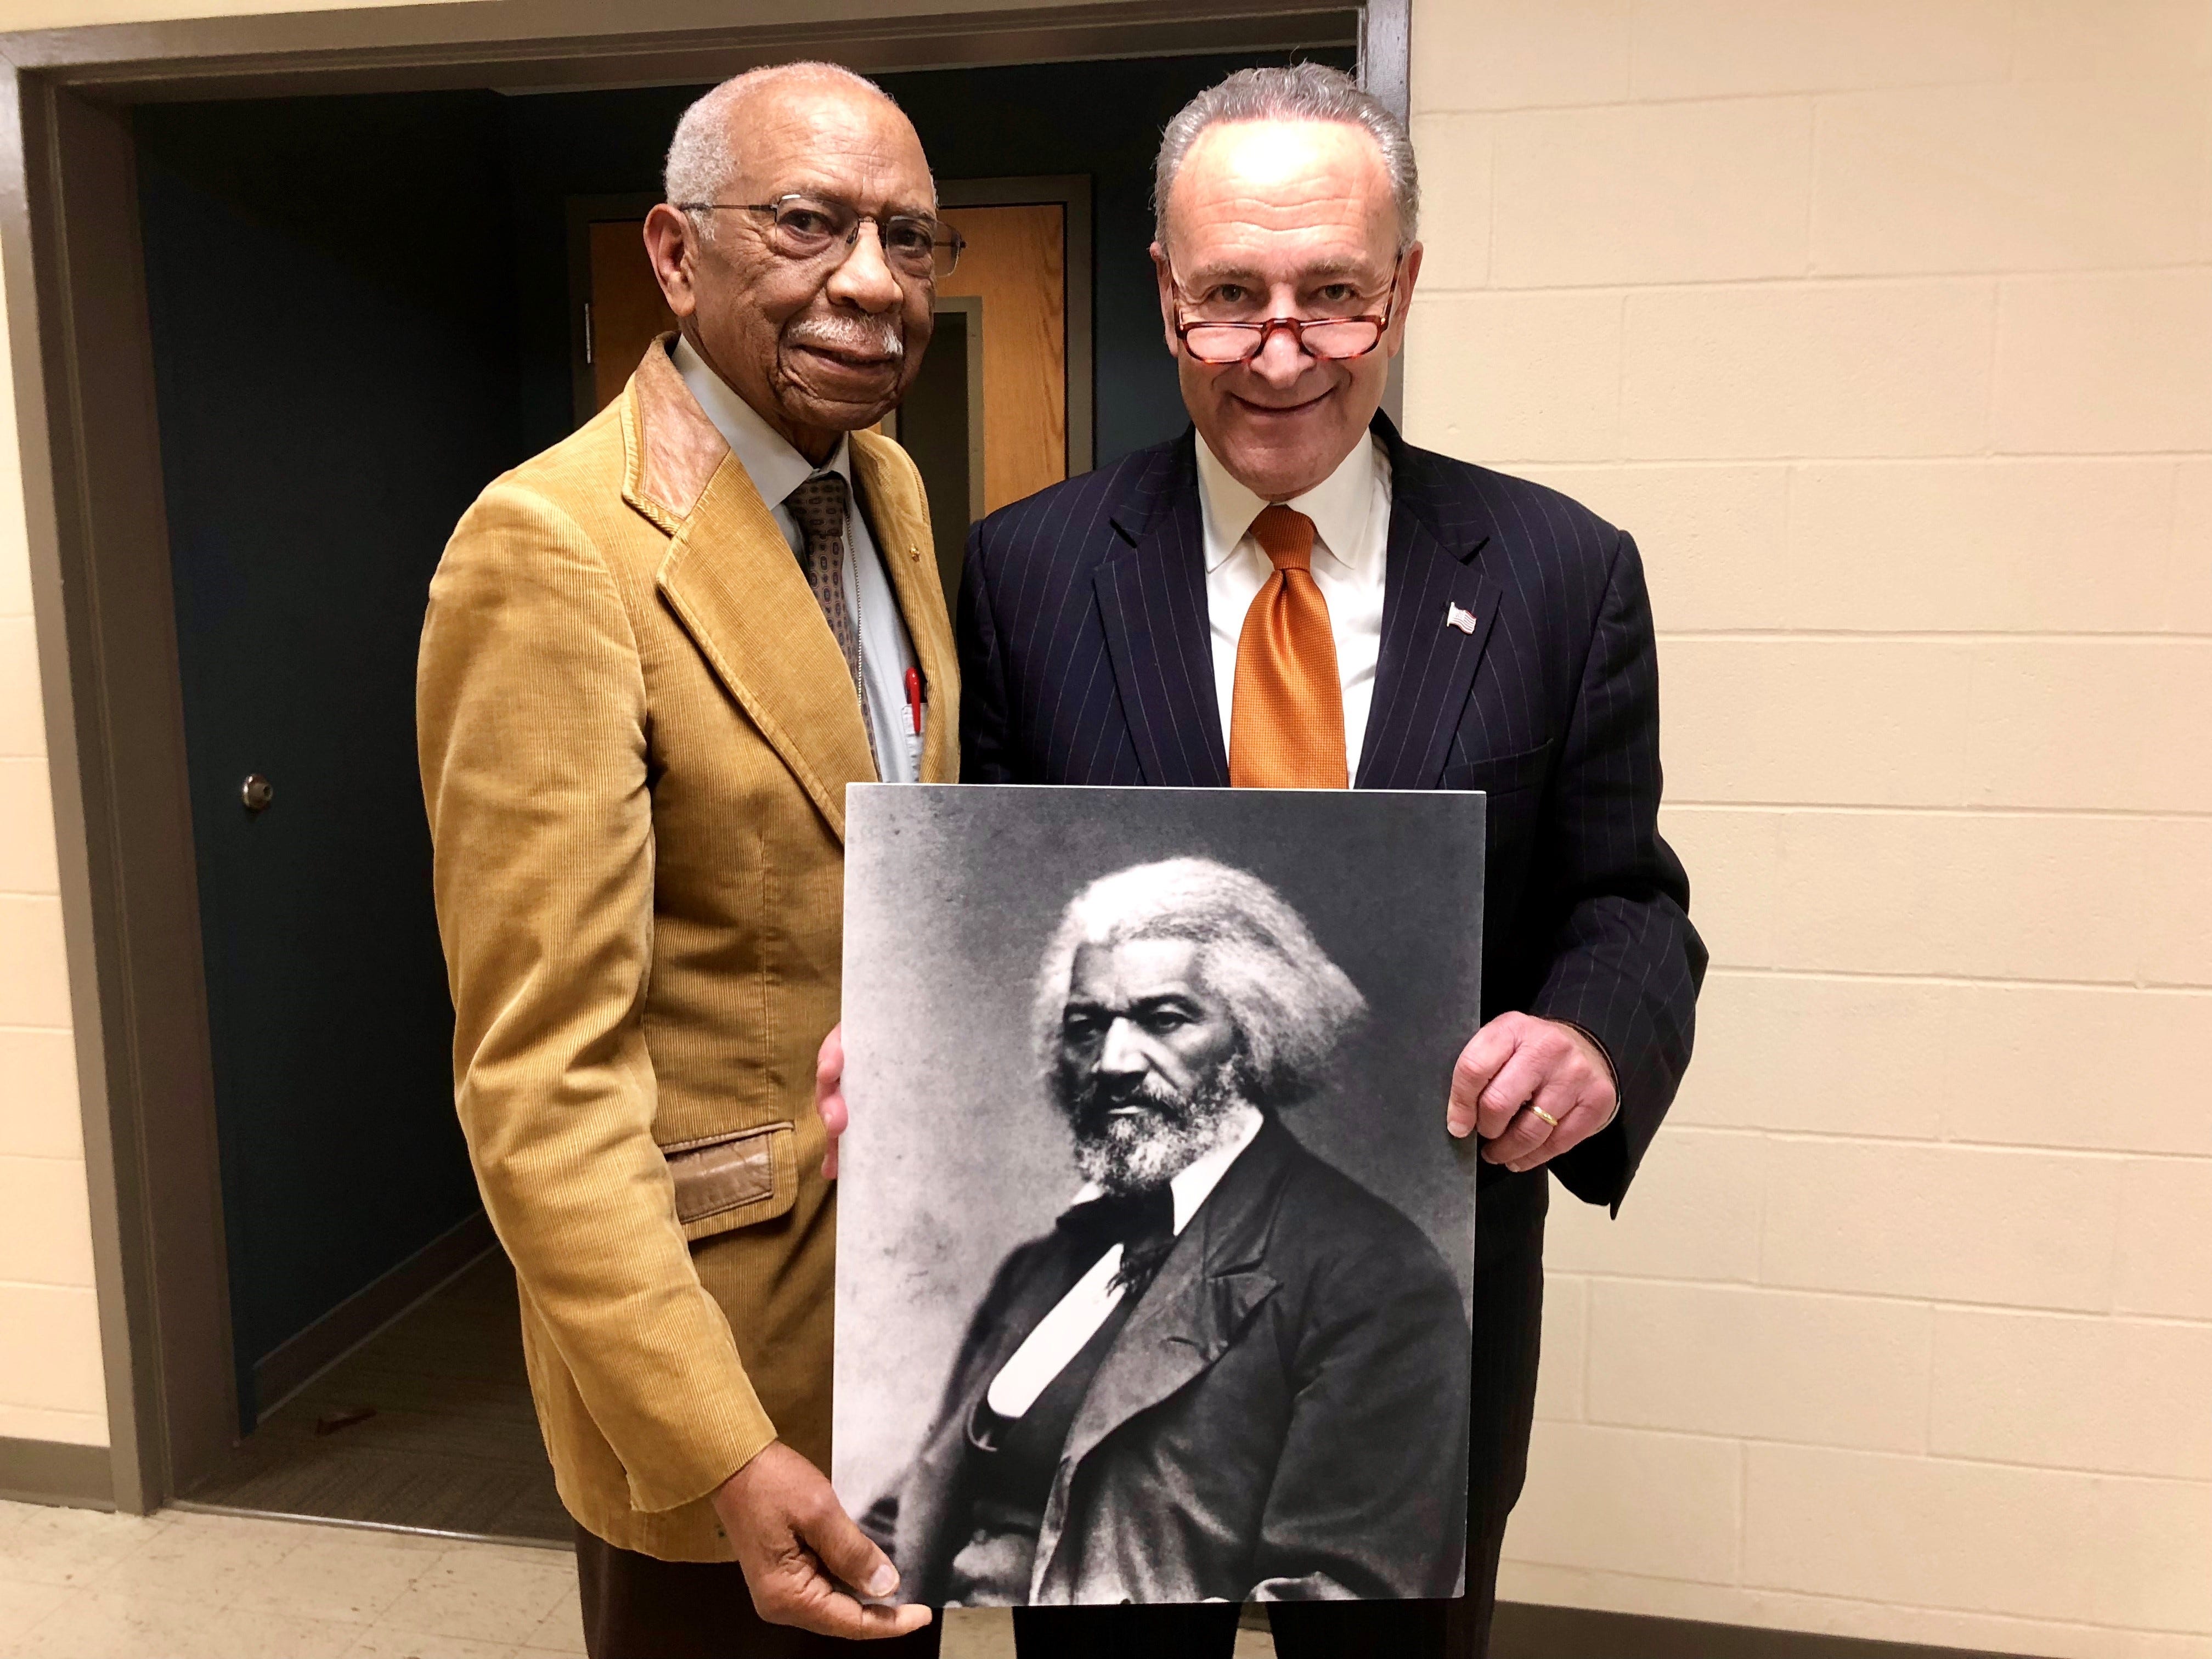 Rochester professor named to Frederick Douglass Bicentennial Commission